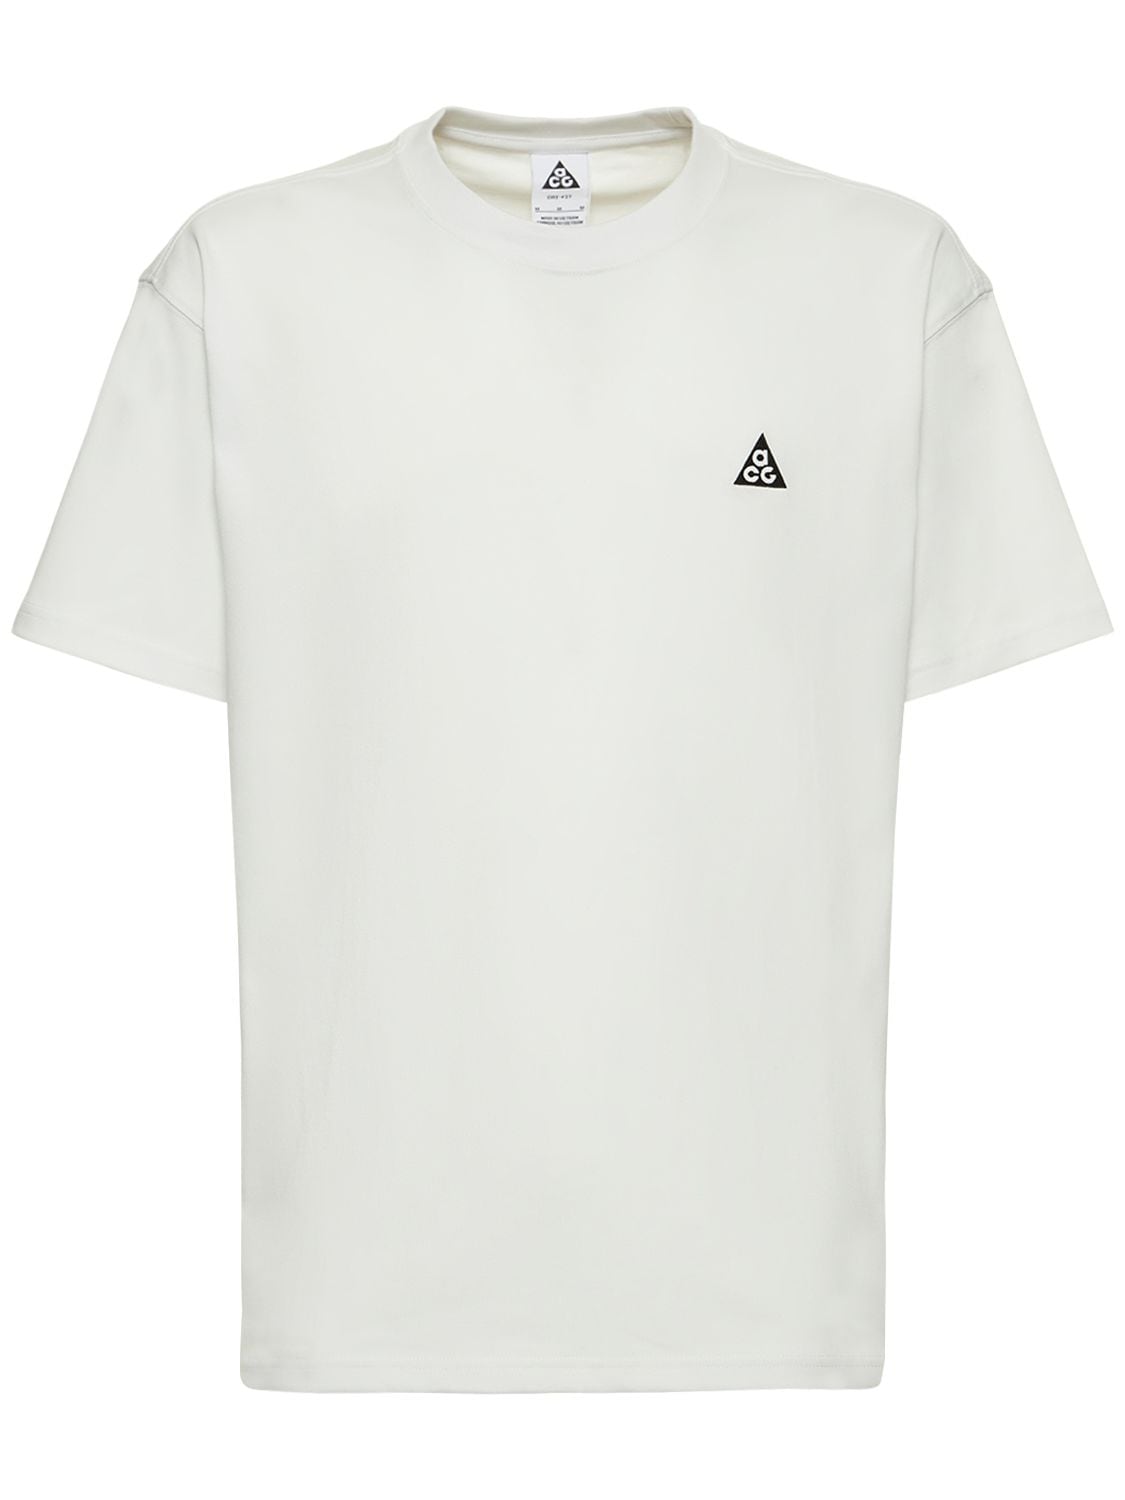 Image of Acg Logo T-shirt